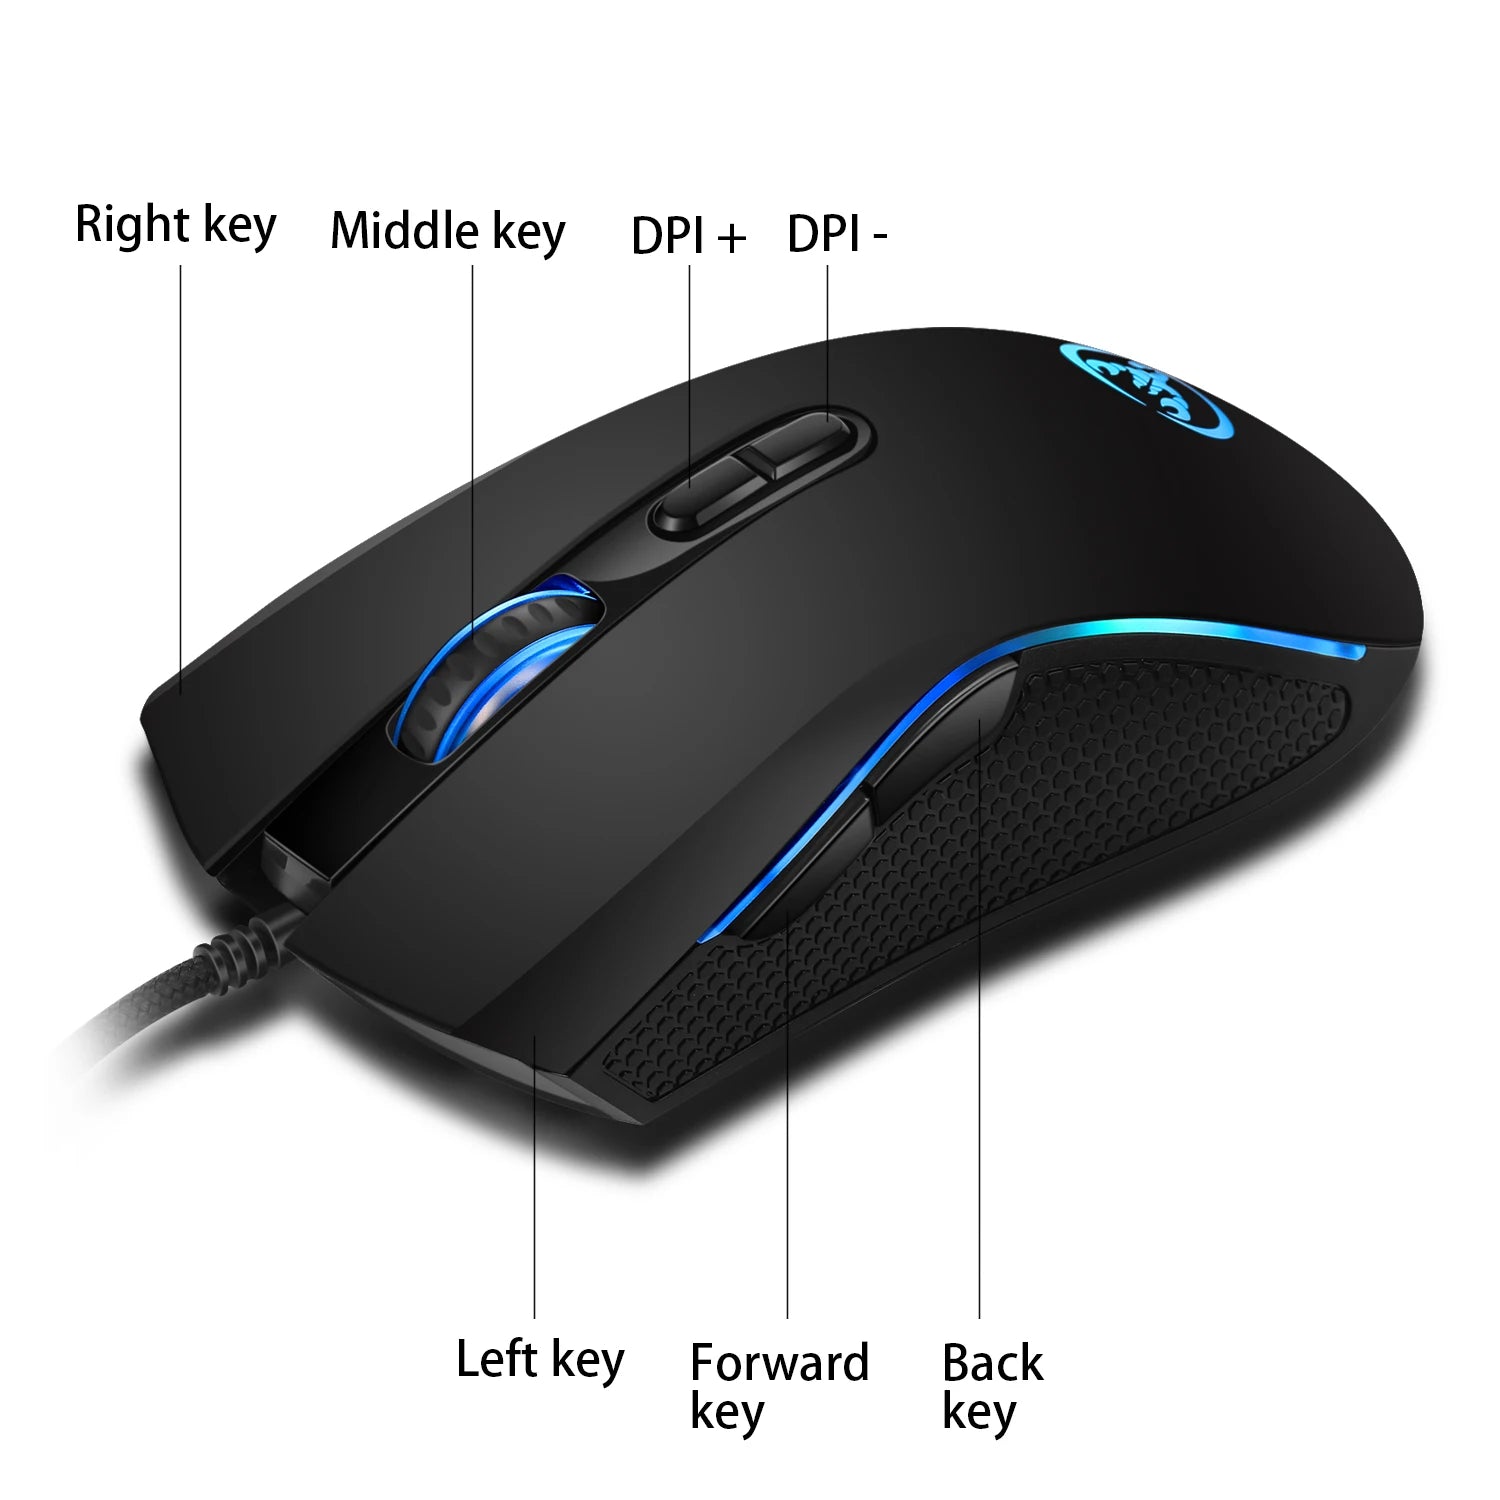 Kit Gamer Mouse e Teclado RGB Backlight - Nitroxx Games | De tudo para games e acessórios 